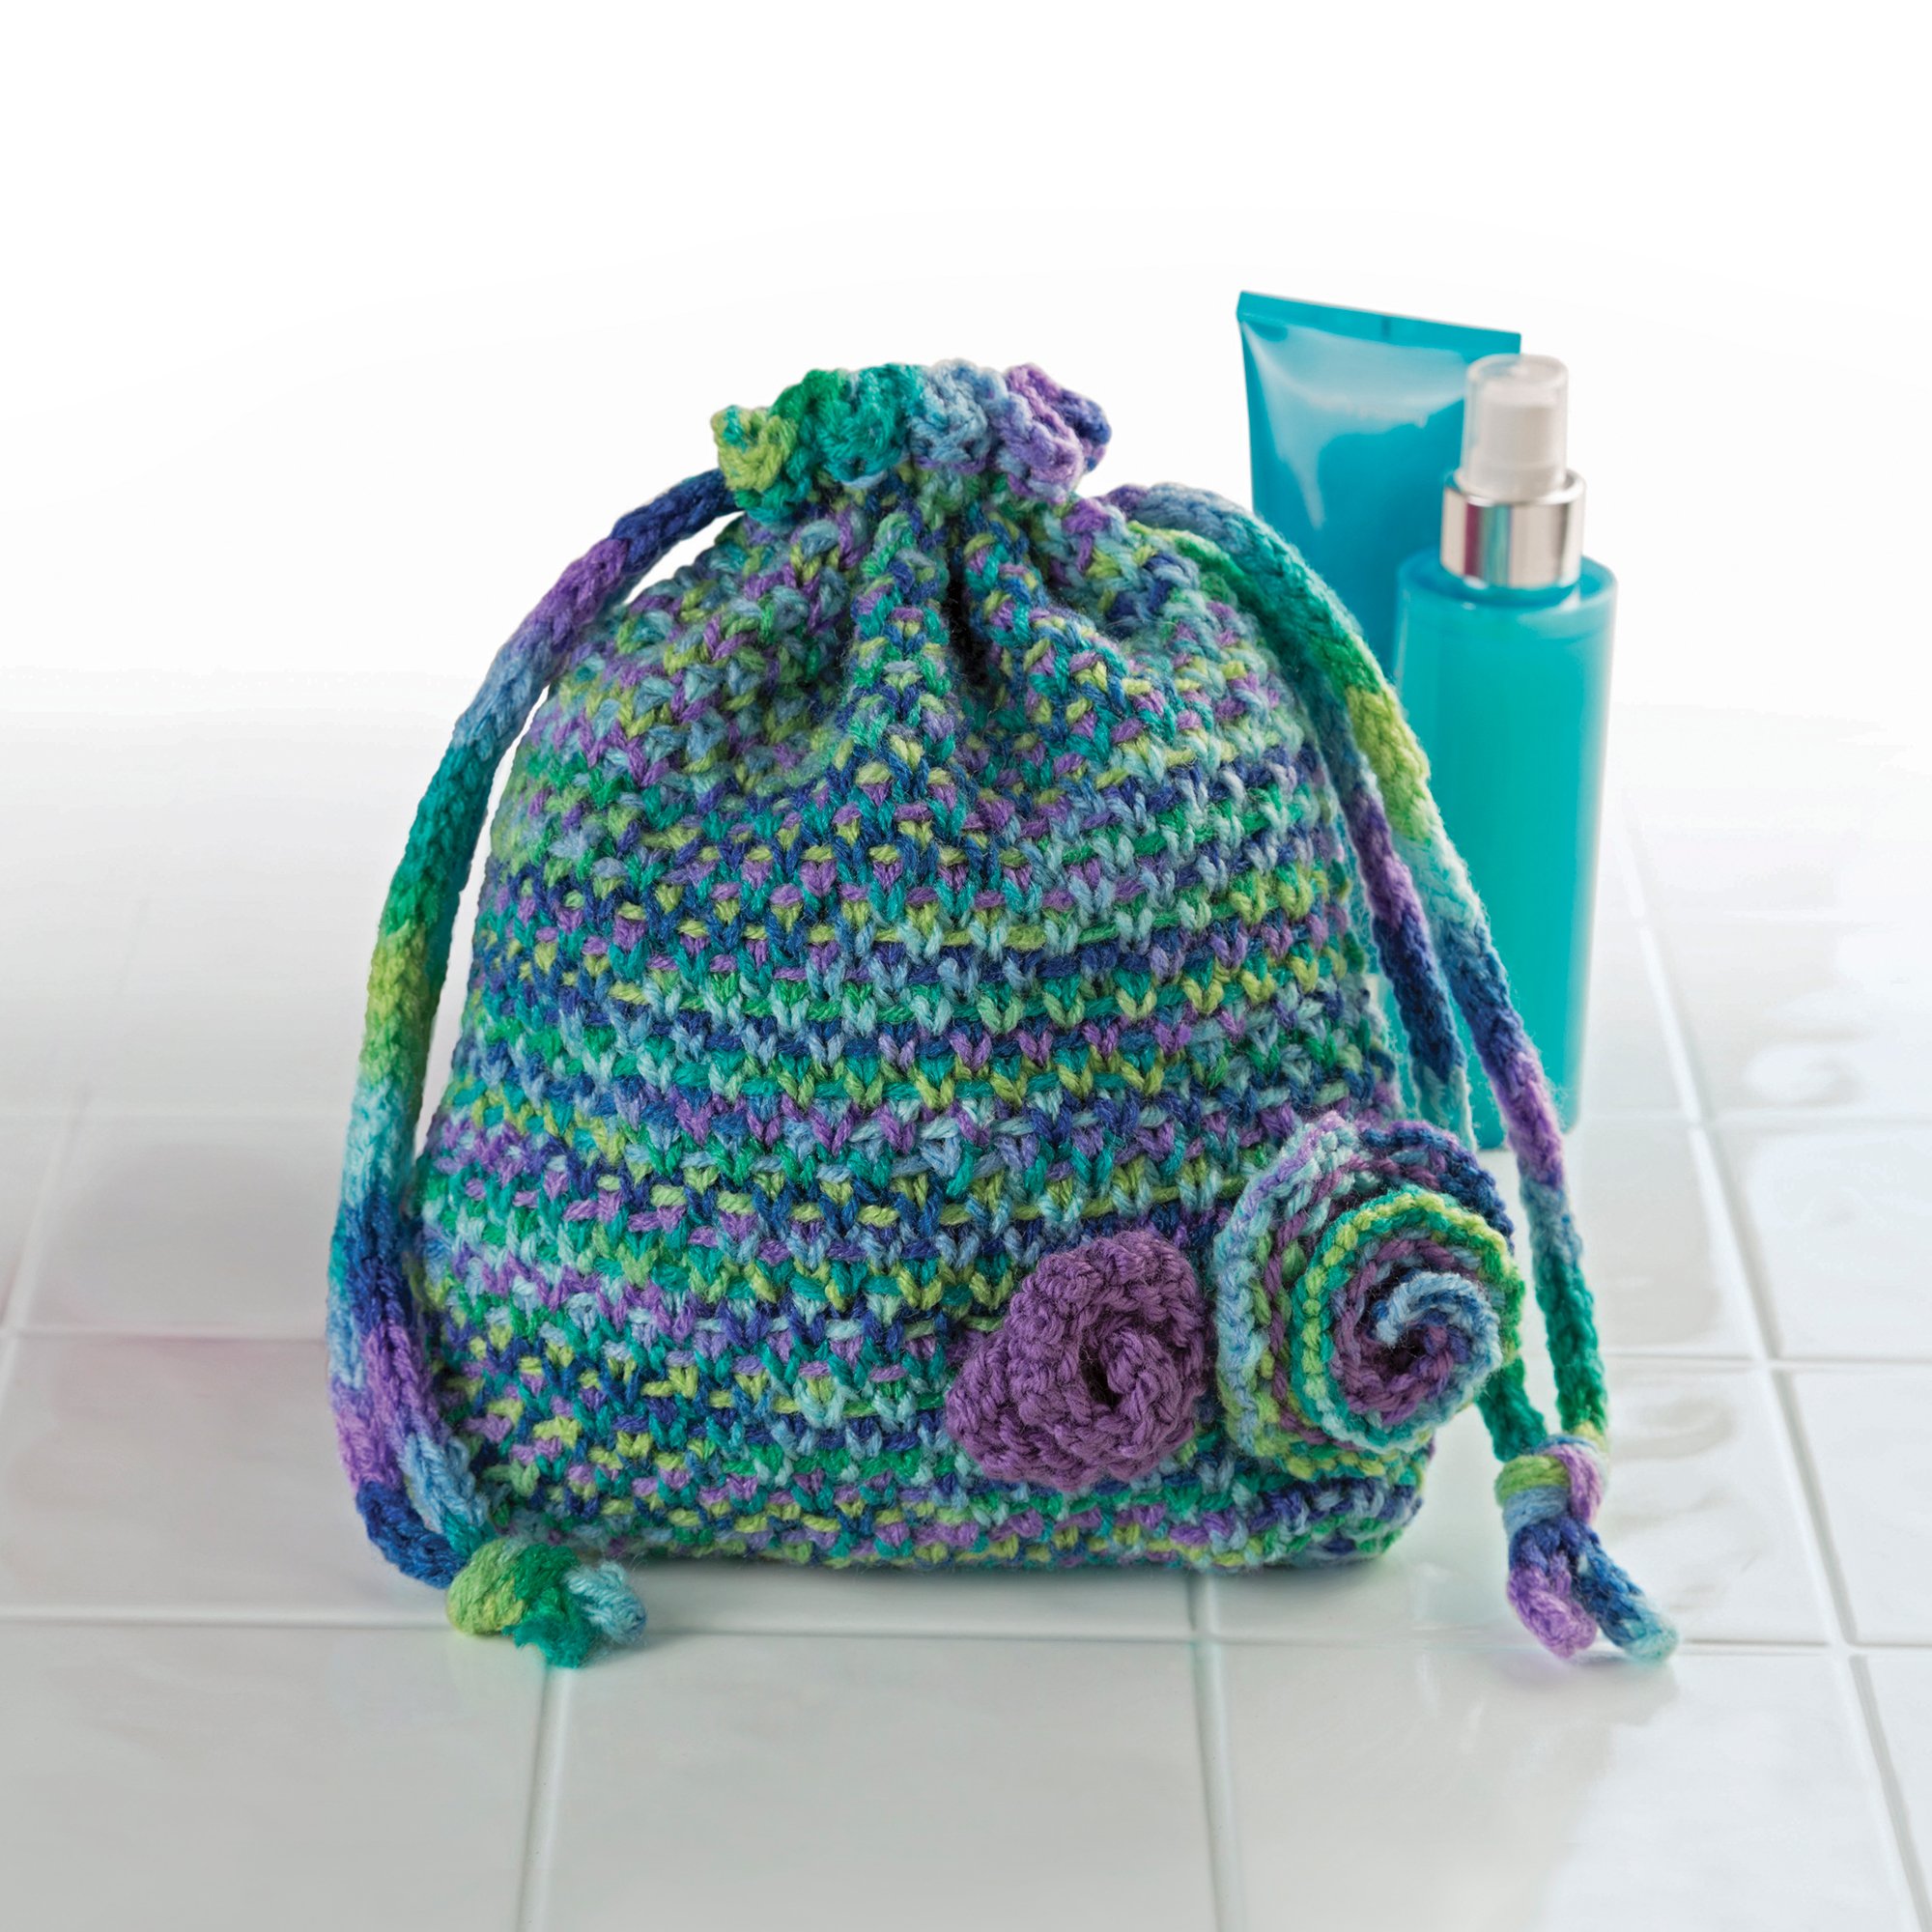 Crochet small drawstring pouch pattern